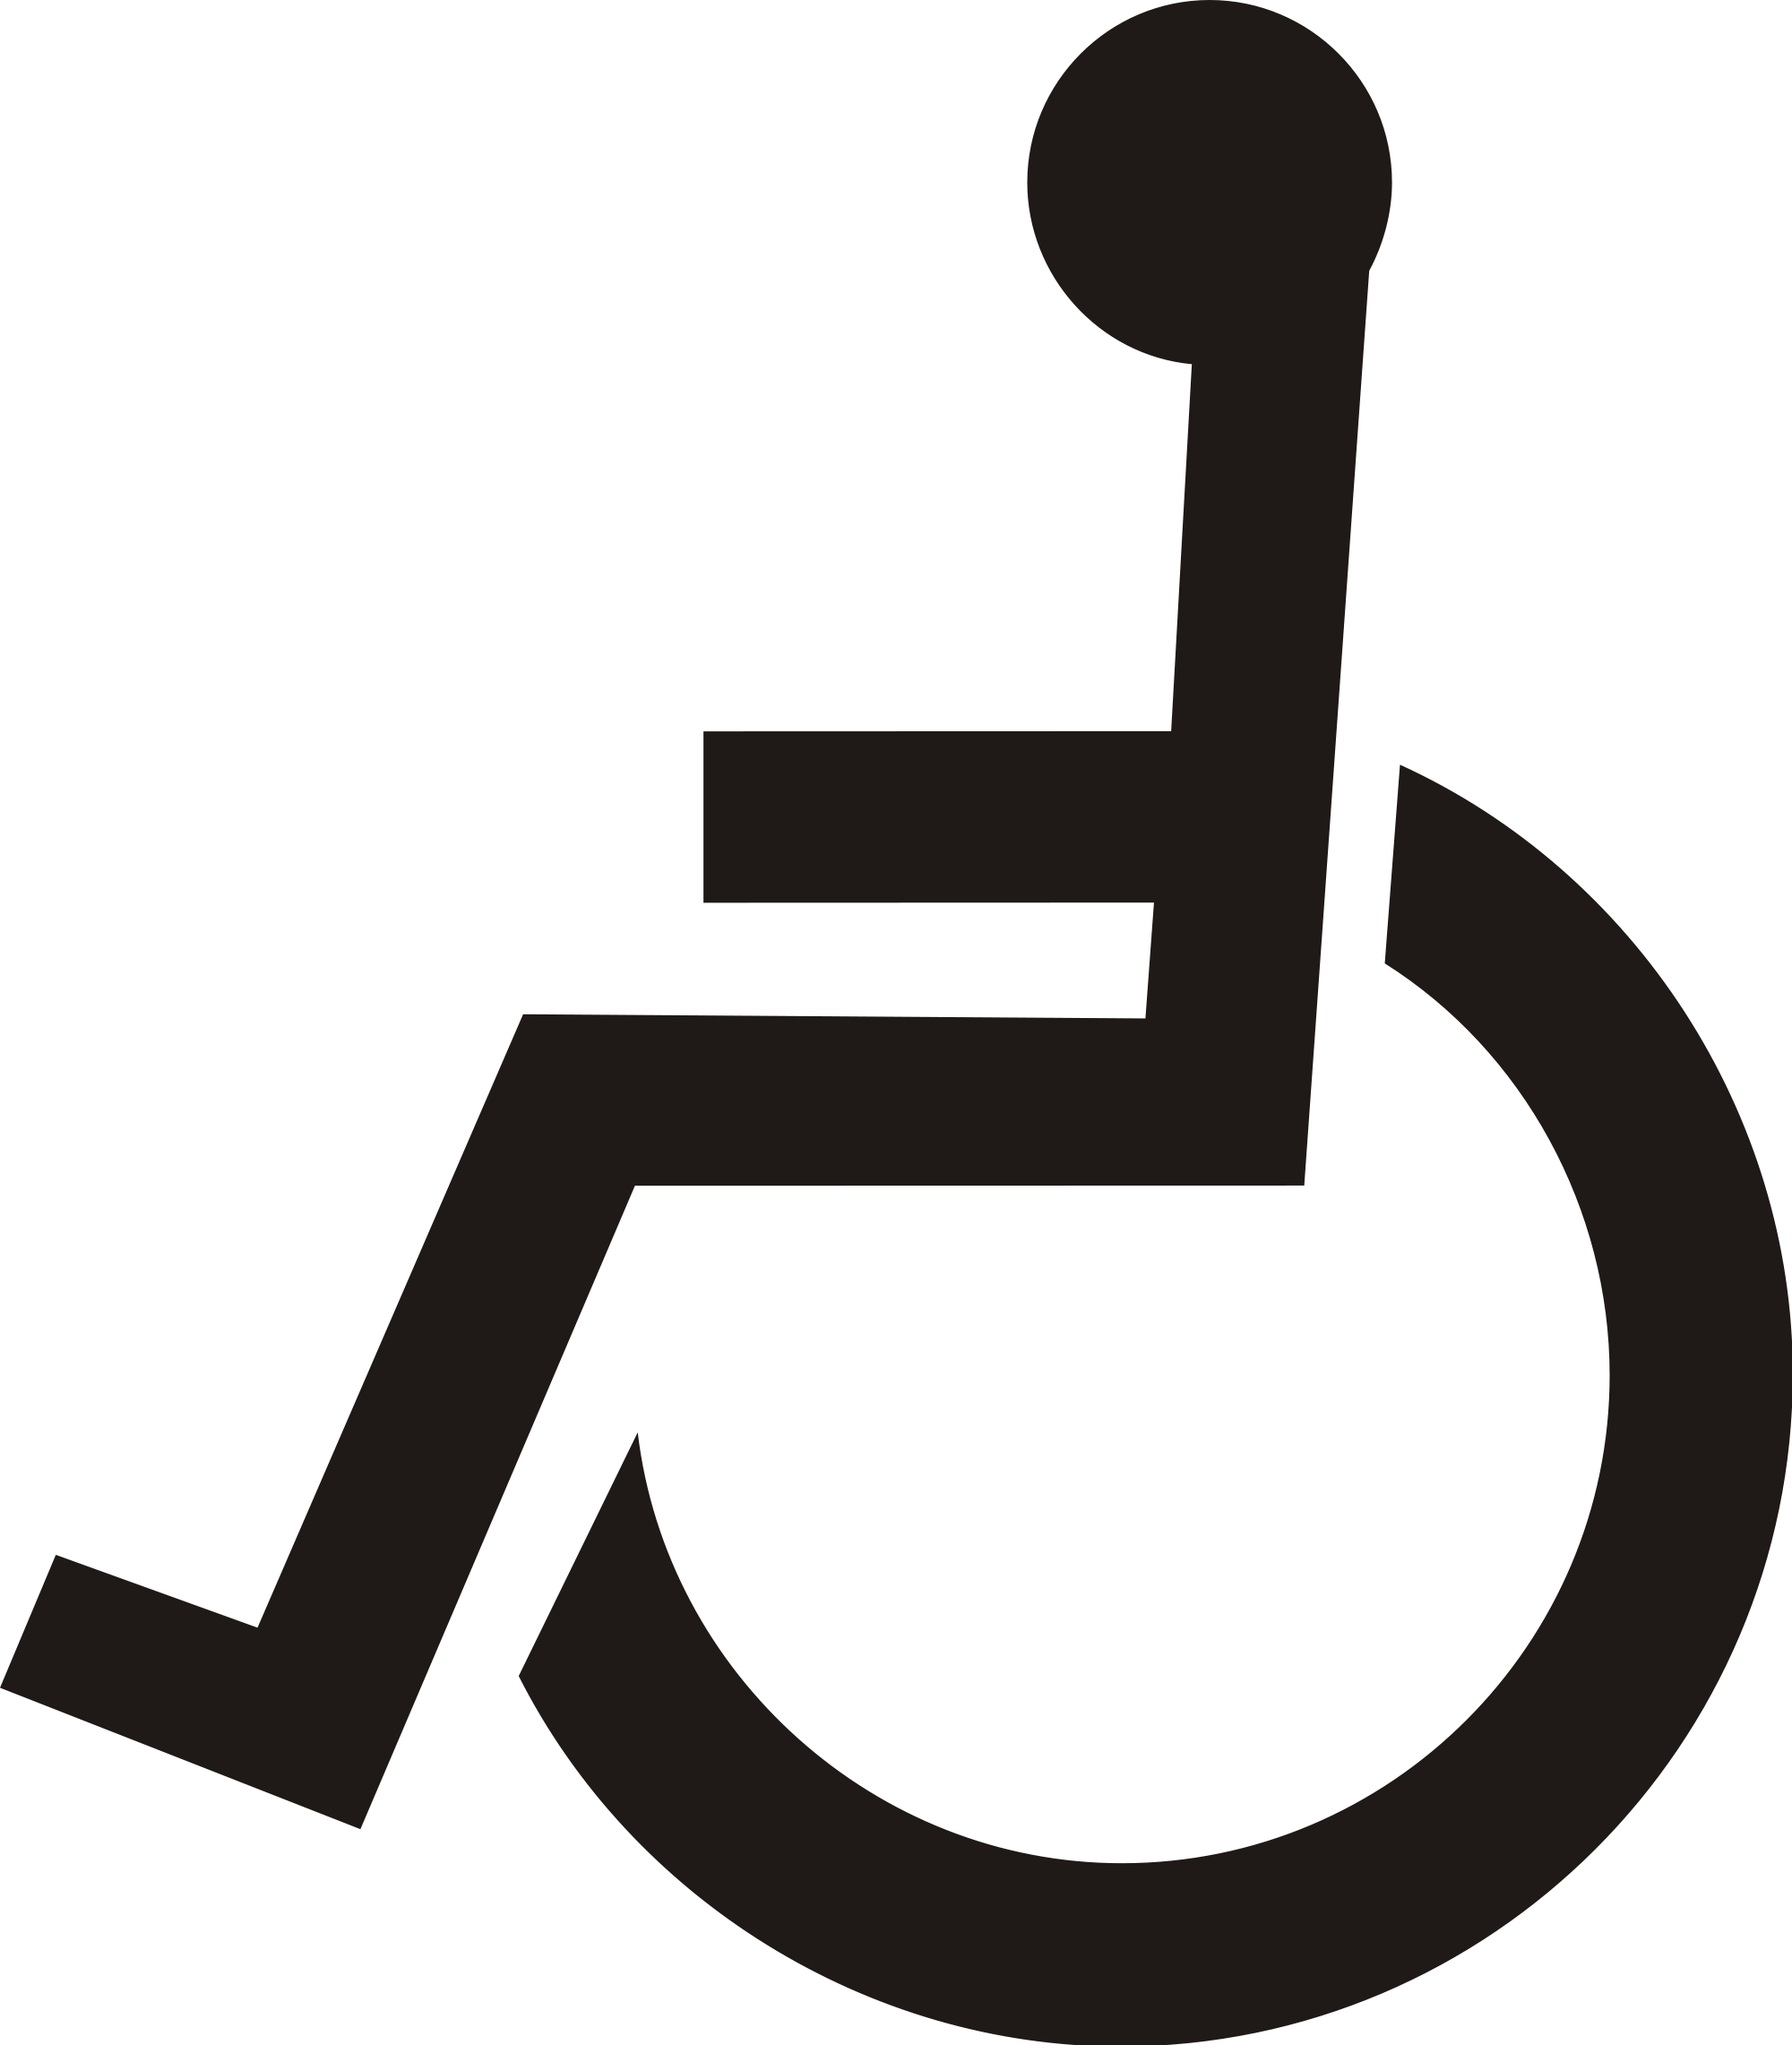 Free Handicap Sign Png, Download Free Handicap Sign Png png images ...